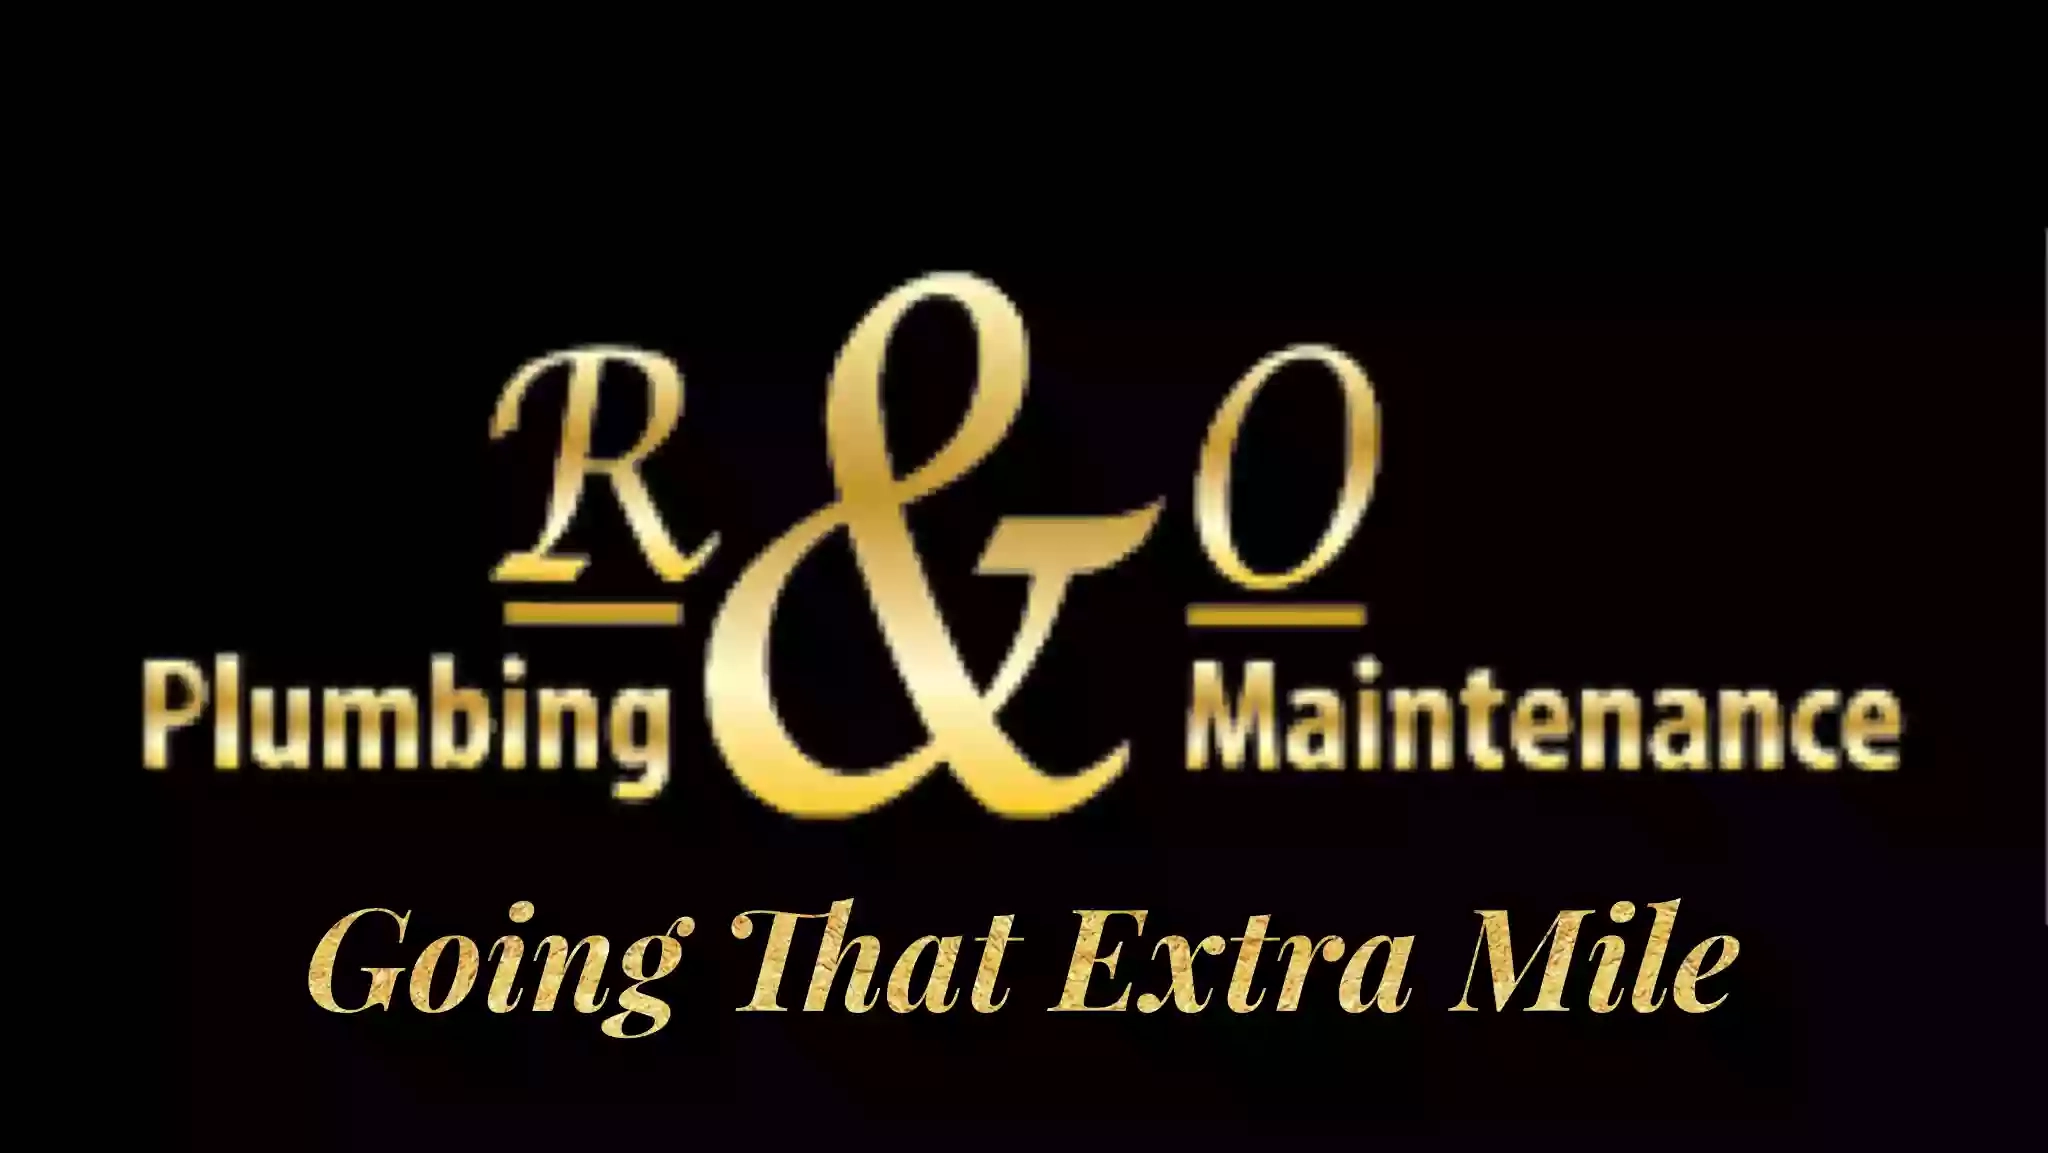 R&O Plumbing and Maintenance Ltd